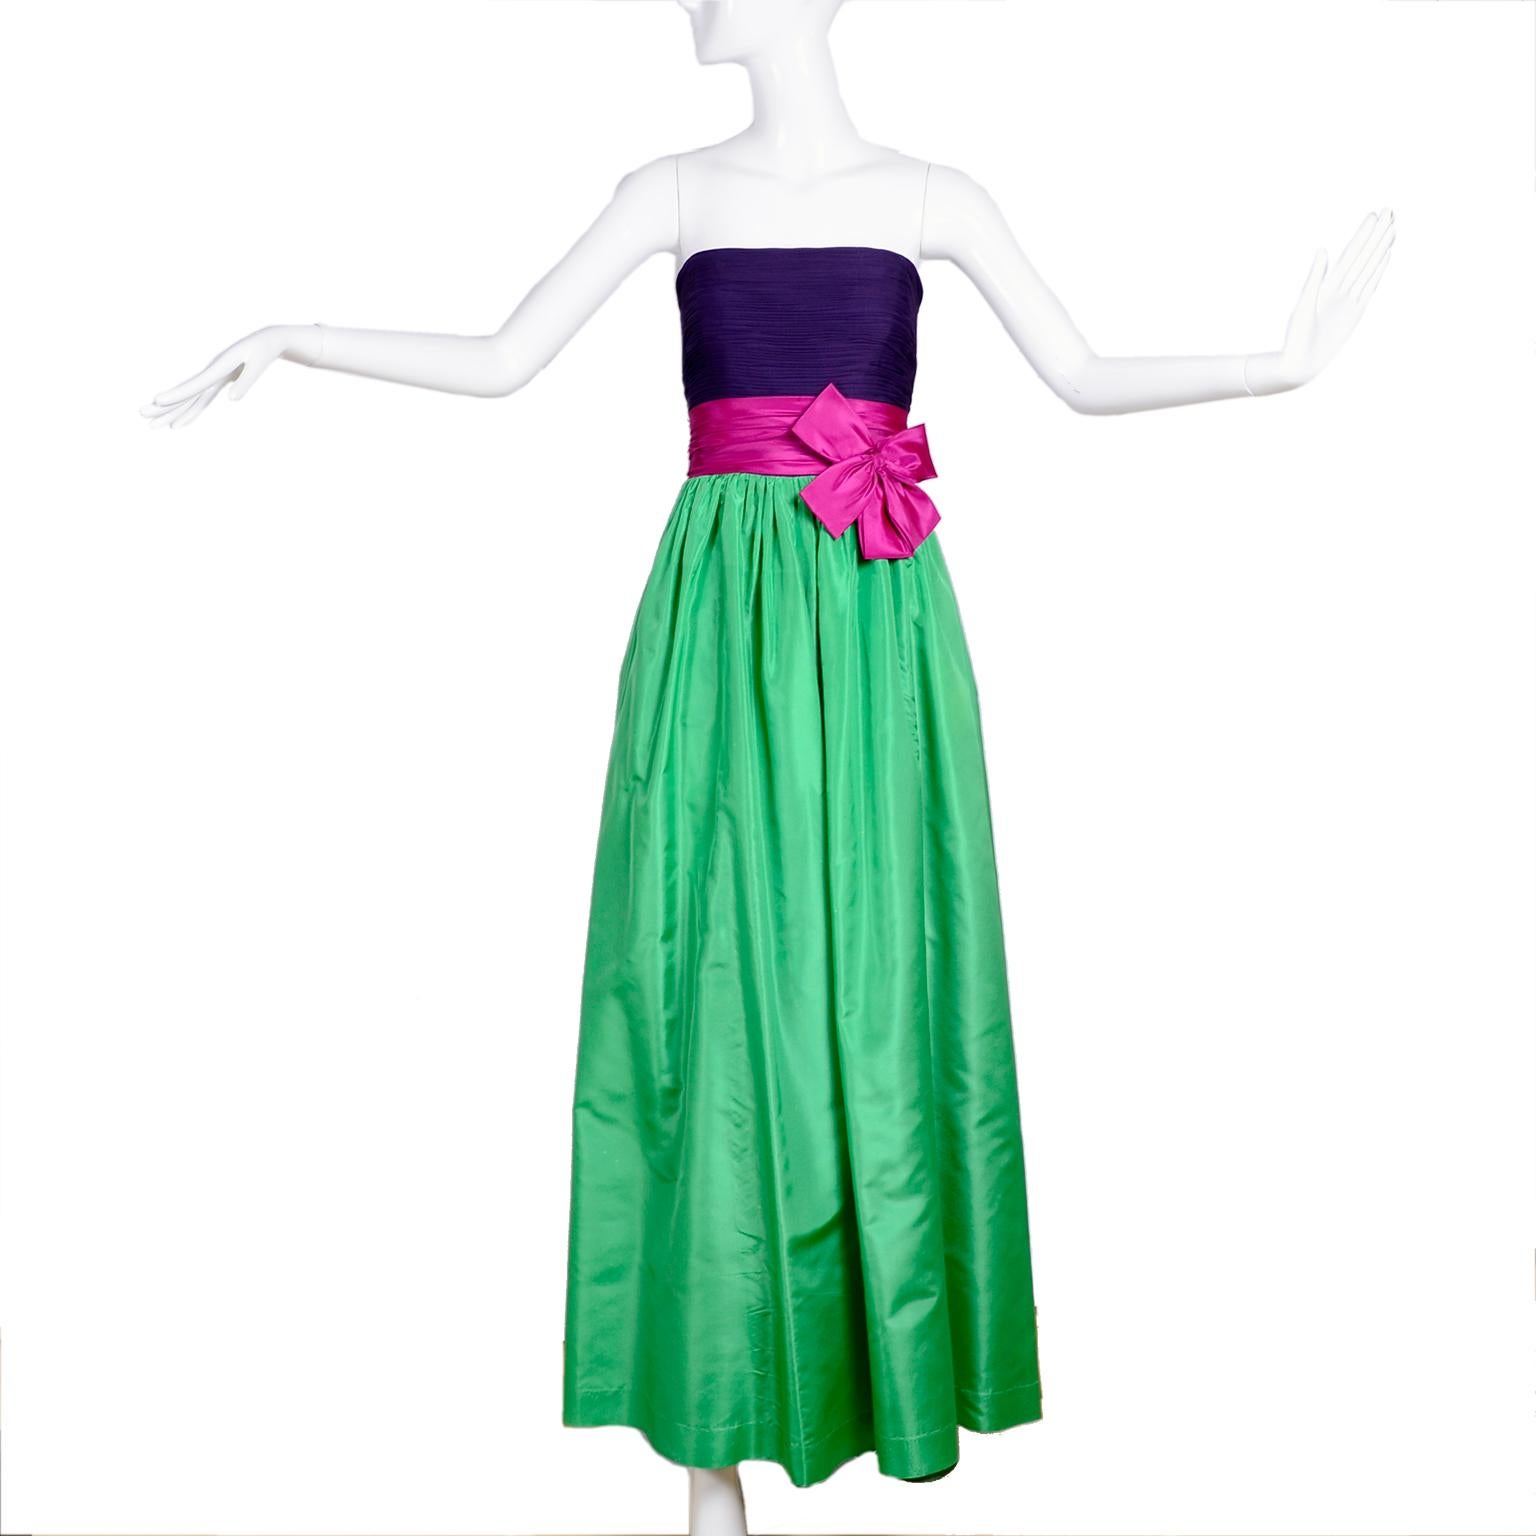 Nina Ricci Strapless Dress Green Taffeta and Purple Silk Evening Gown w Pink Bow 1